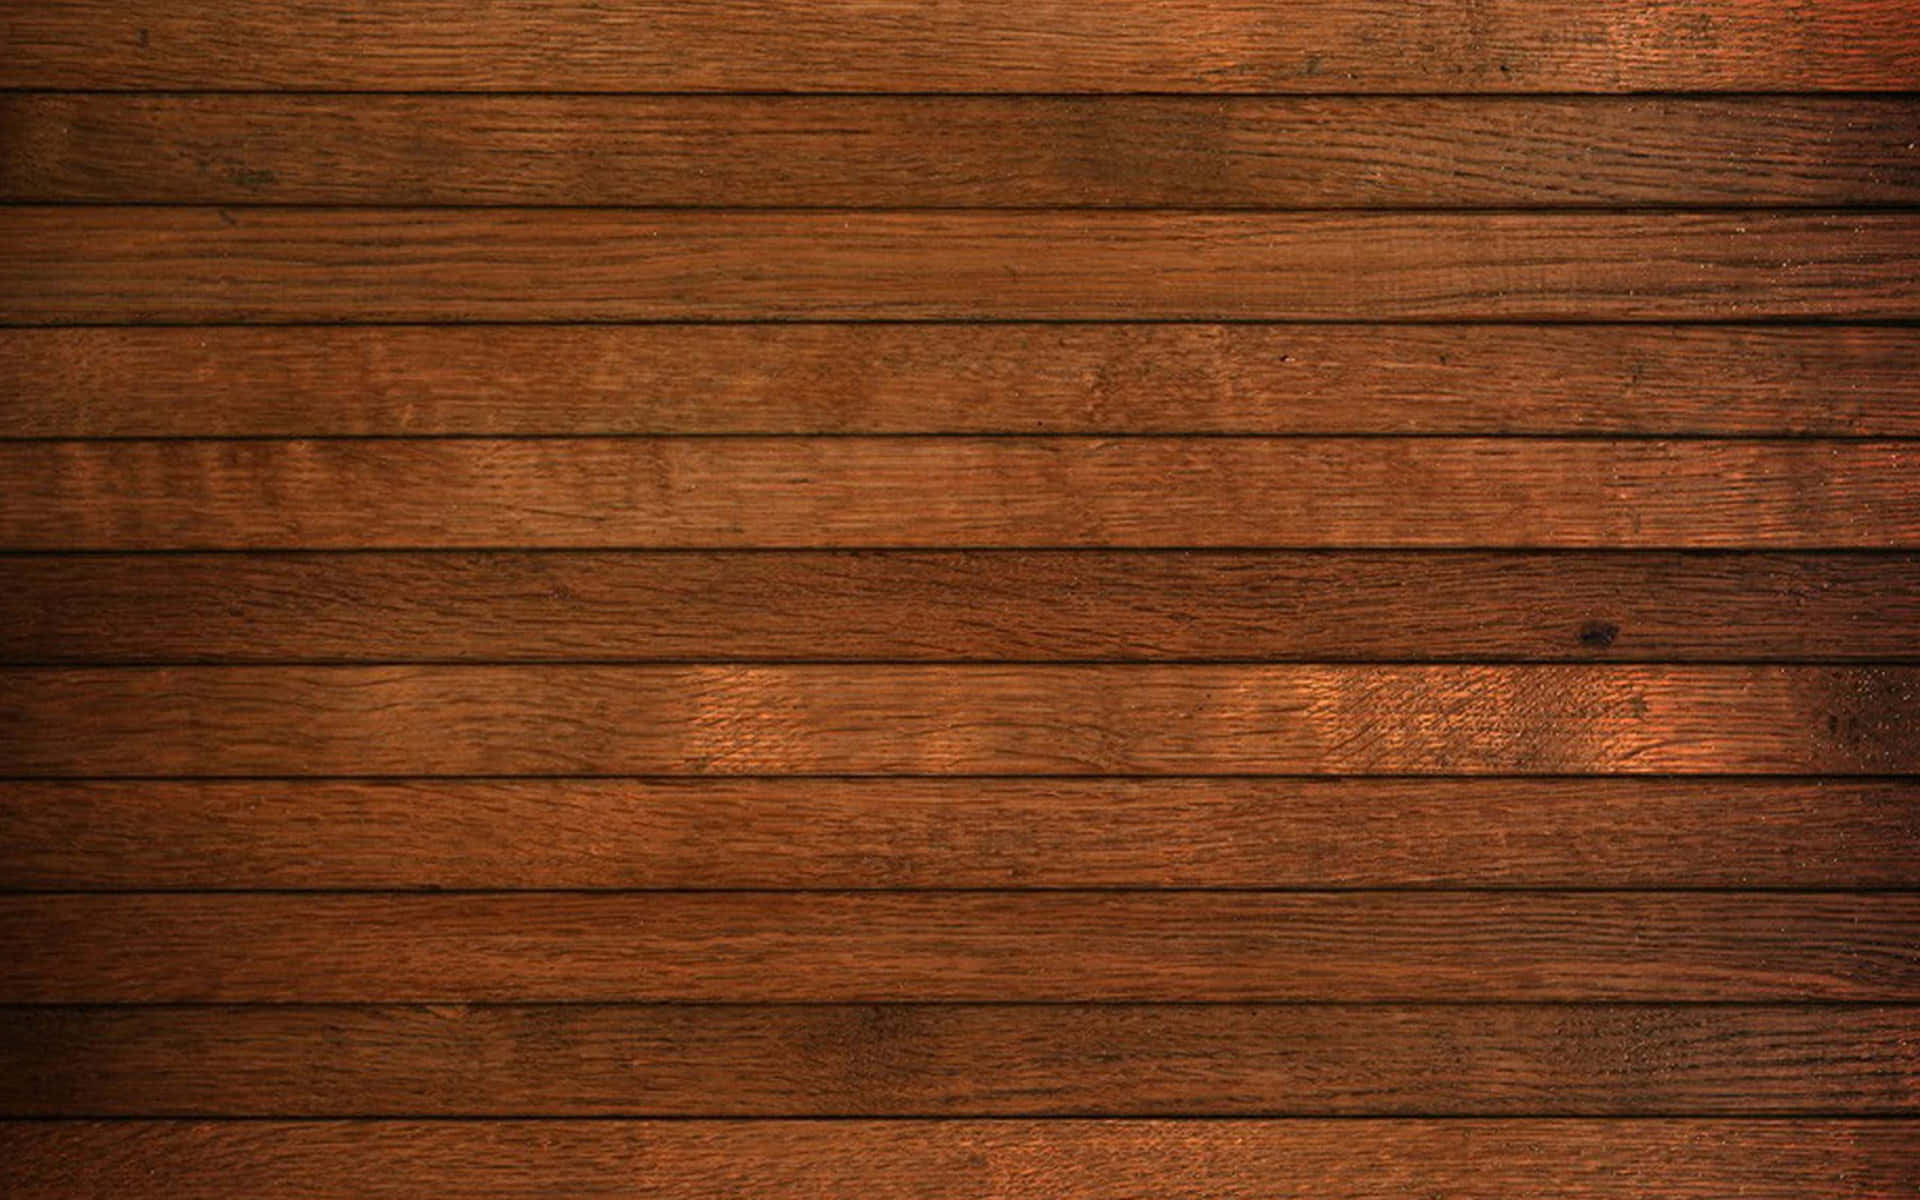 woodgrain website background